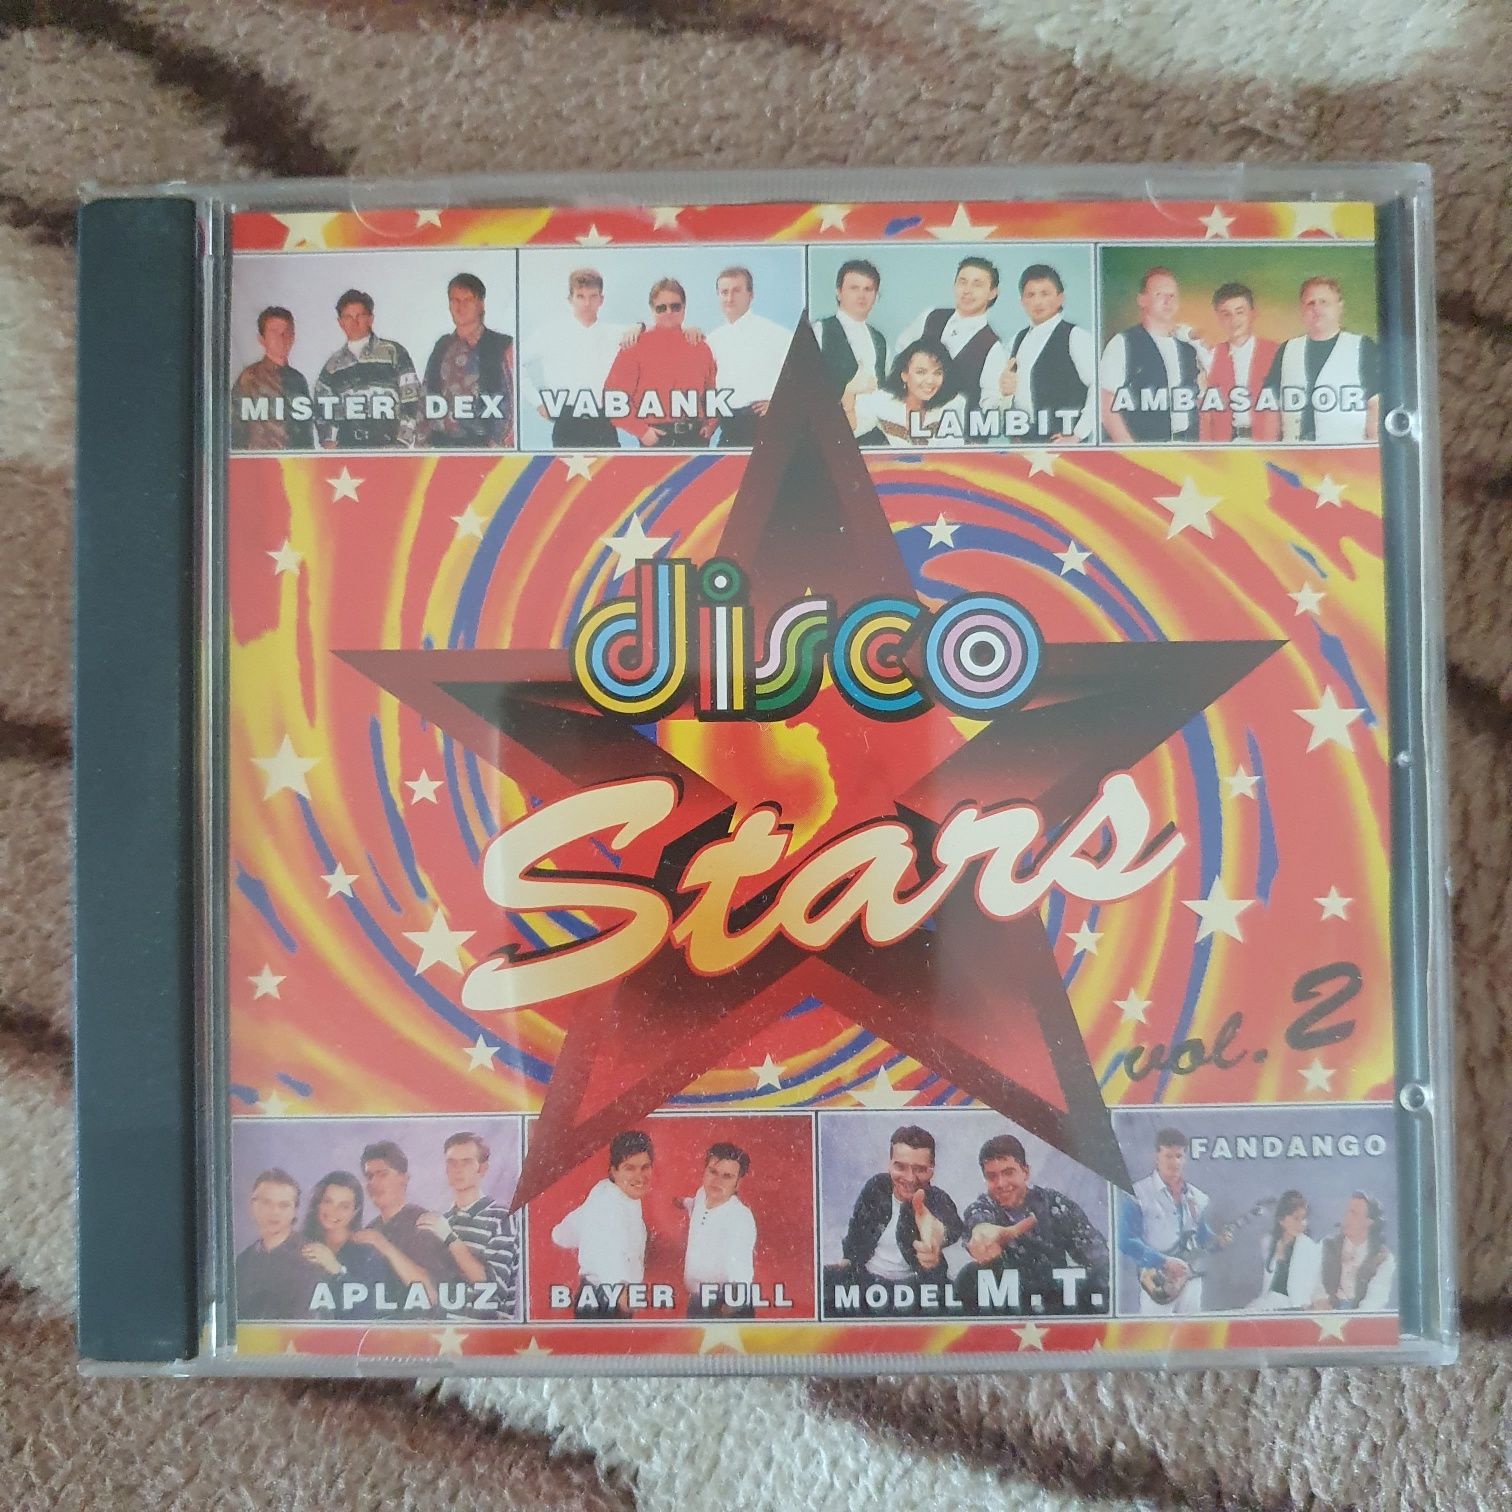 Płyta CD Disco Stars vol. 2